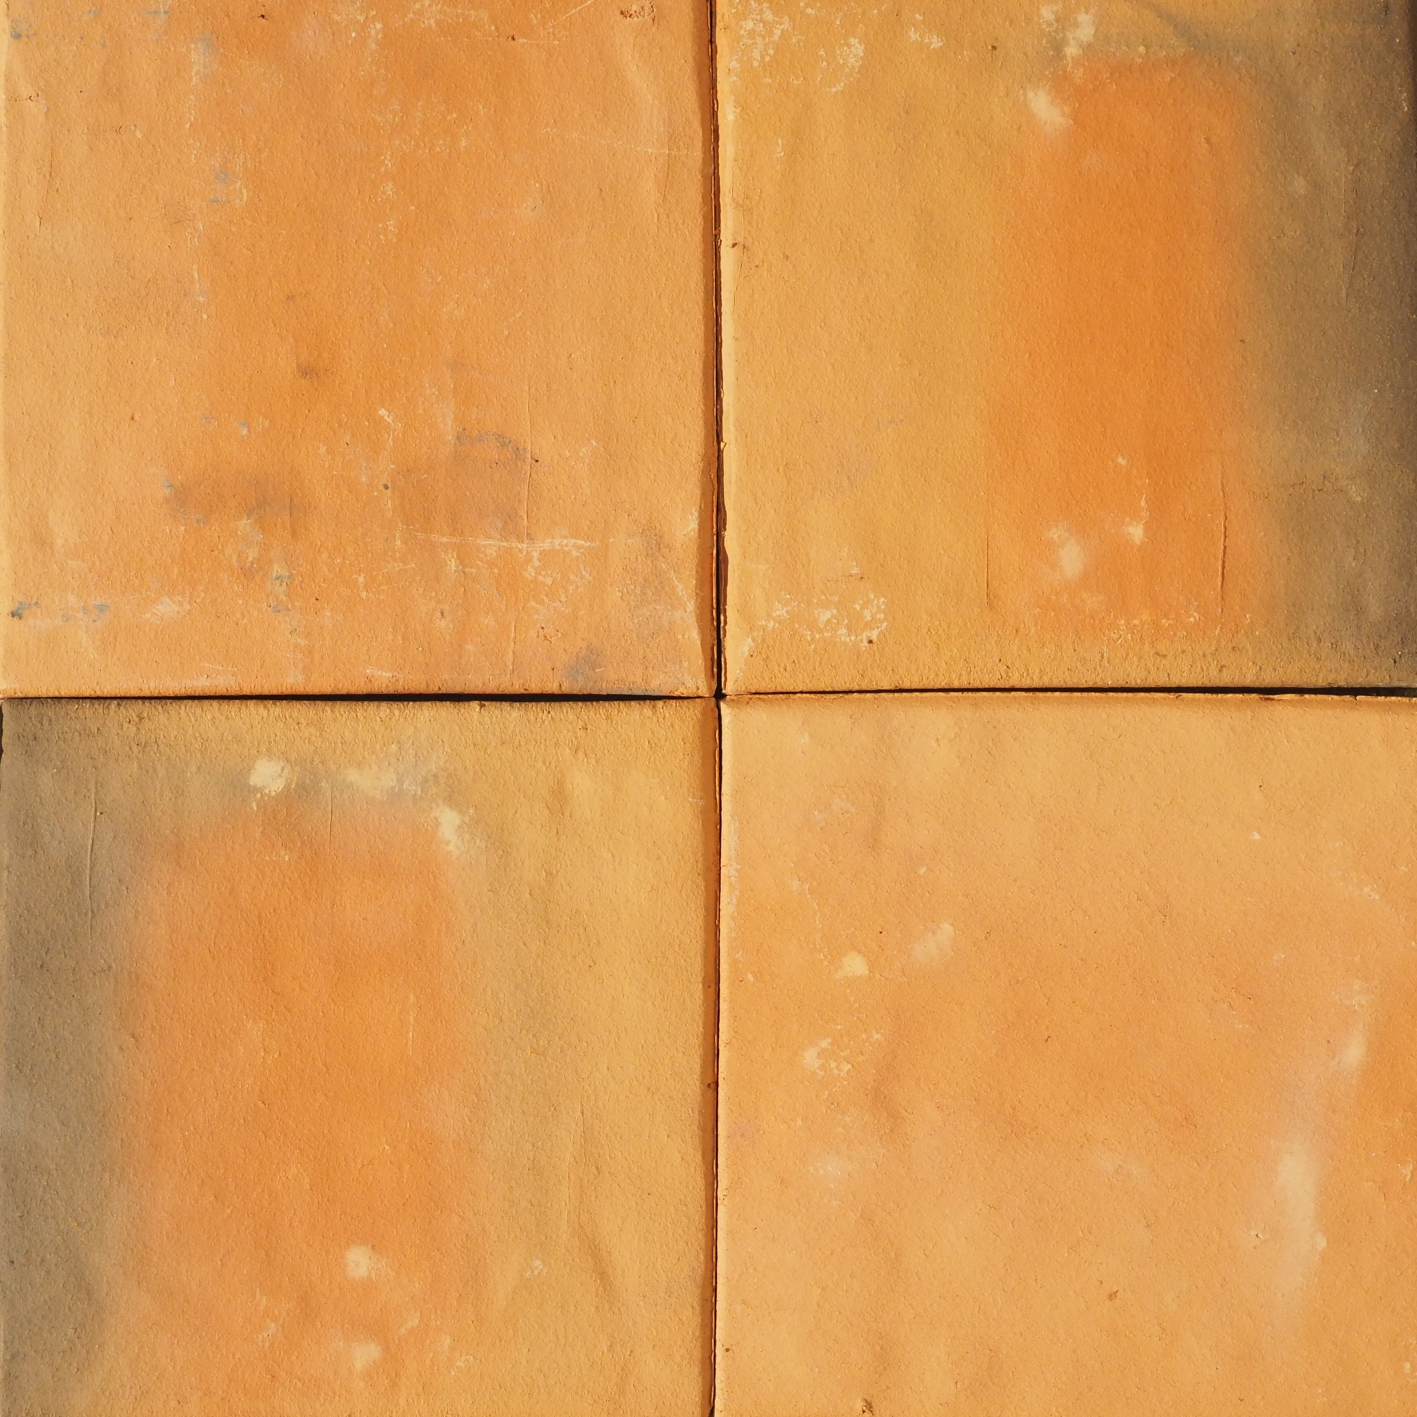 Artisanal terracotta tiles ‘Porquerolles’ (19 x 19 cm) ca. 1980